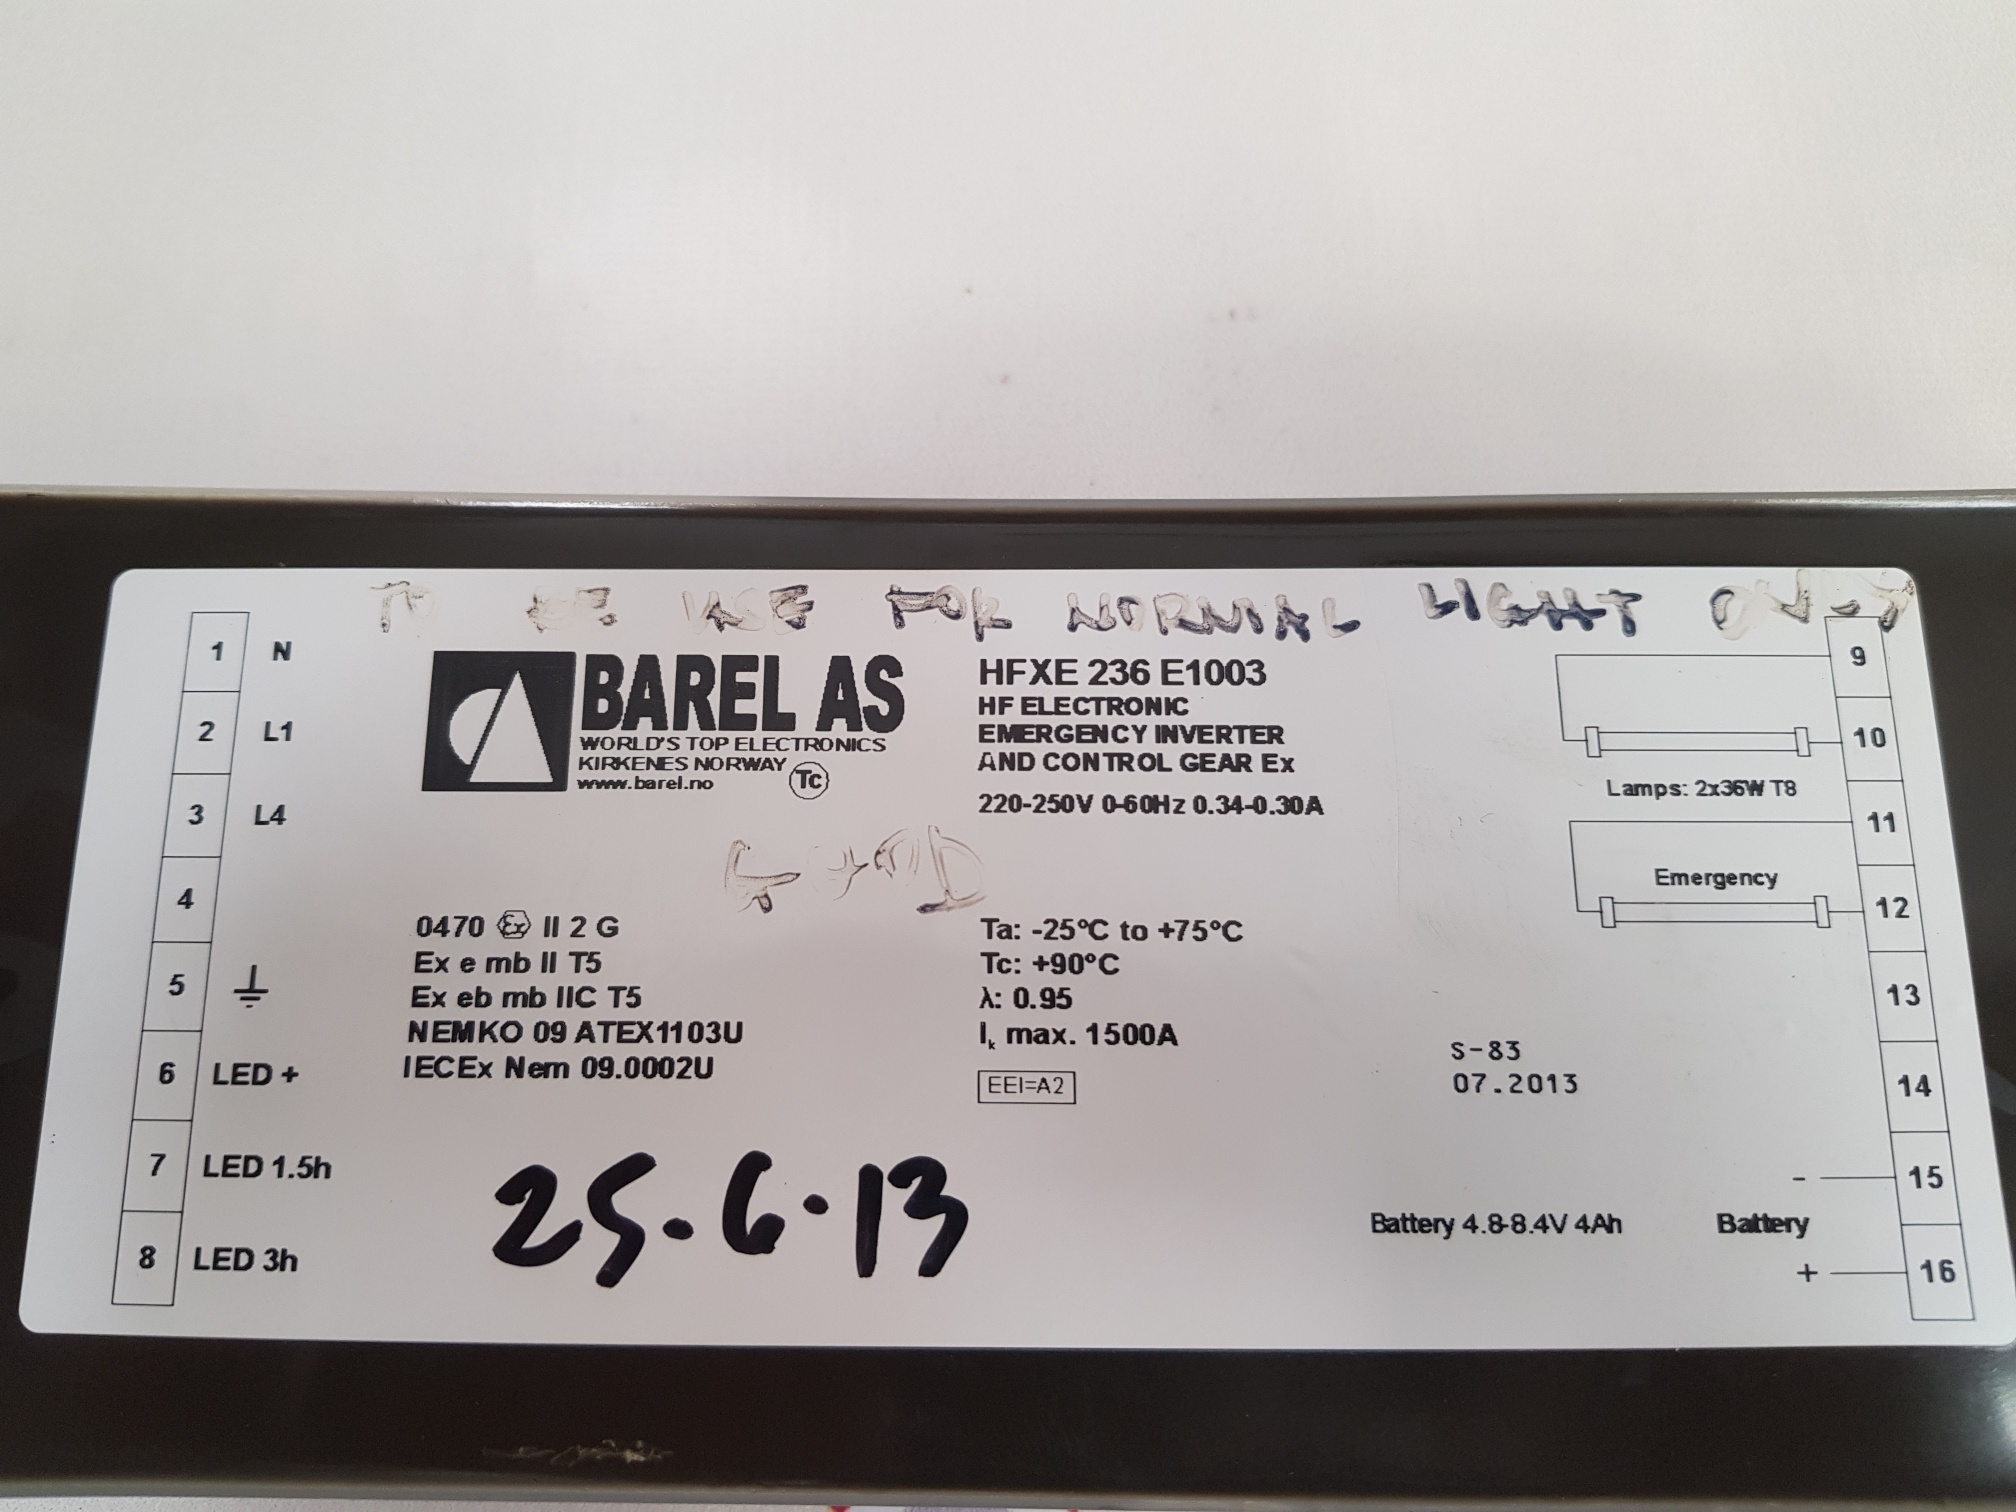 BAREL HFXE 236 E1003 EMERGENCY INVERTER AND CONTROL GEAR EX